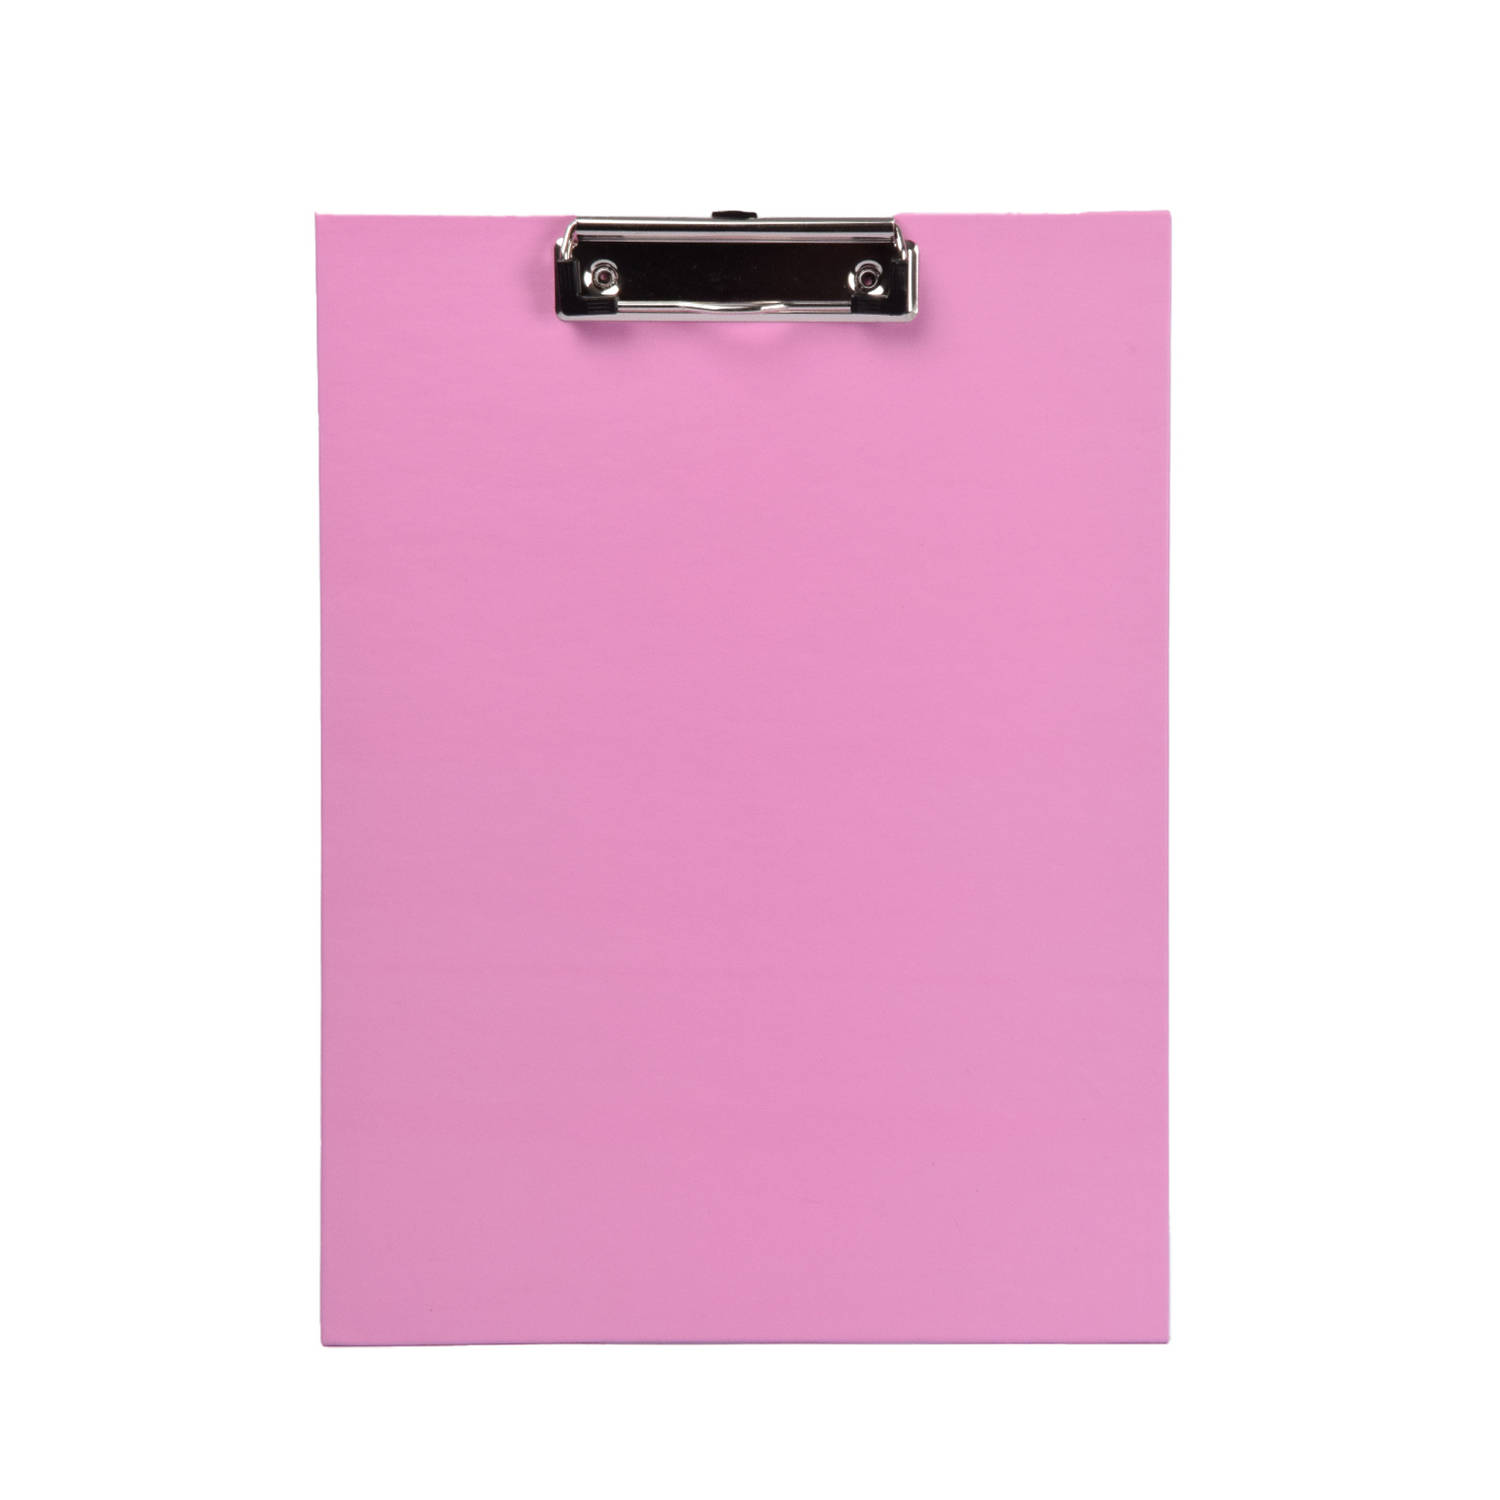 Klembord A4 met Omslag en Haakje - Roze Klembord - Handig voor Kantoor en Onderweg